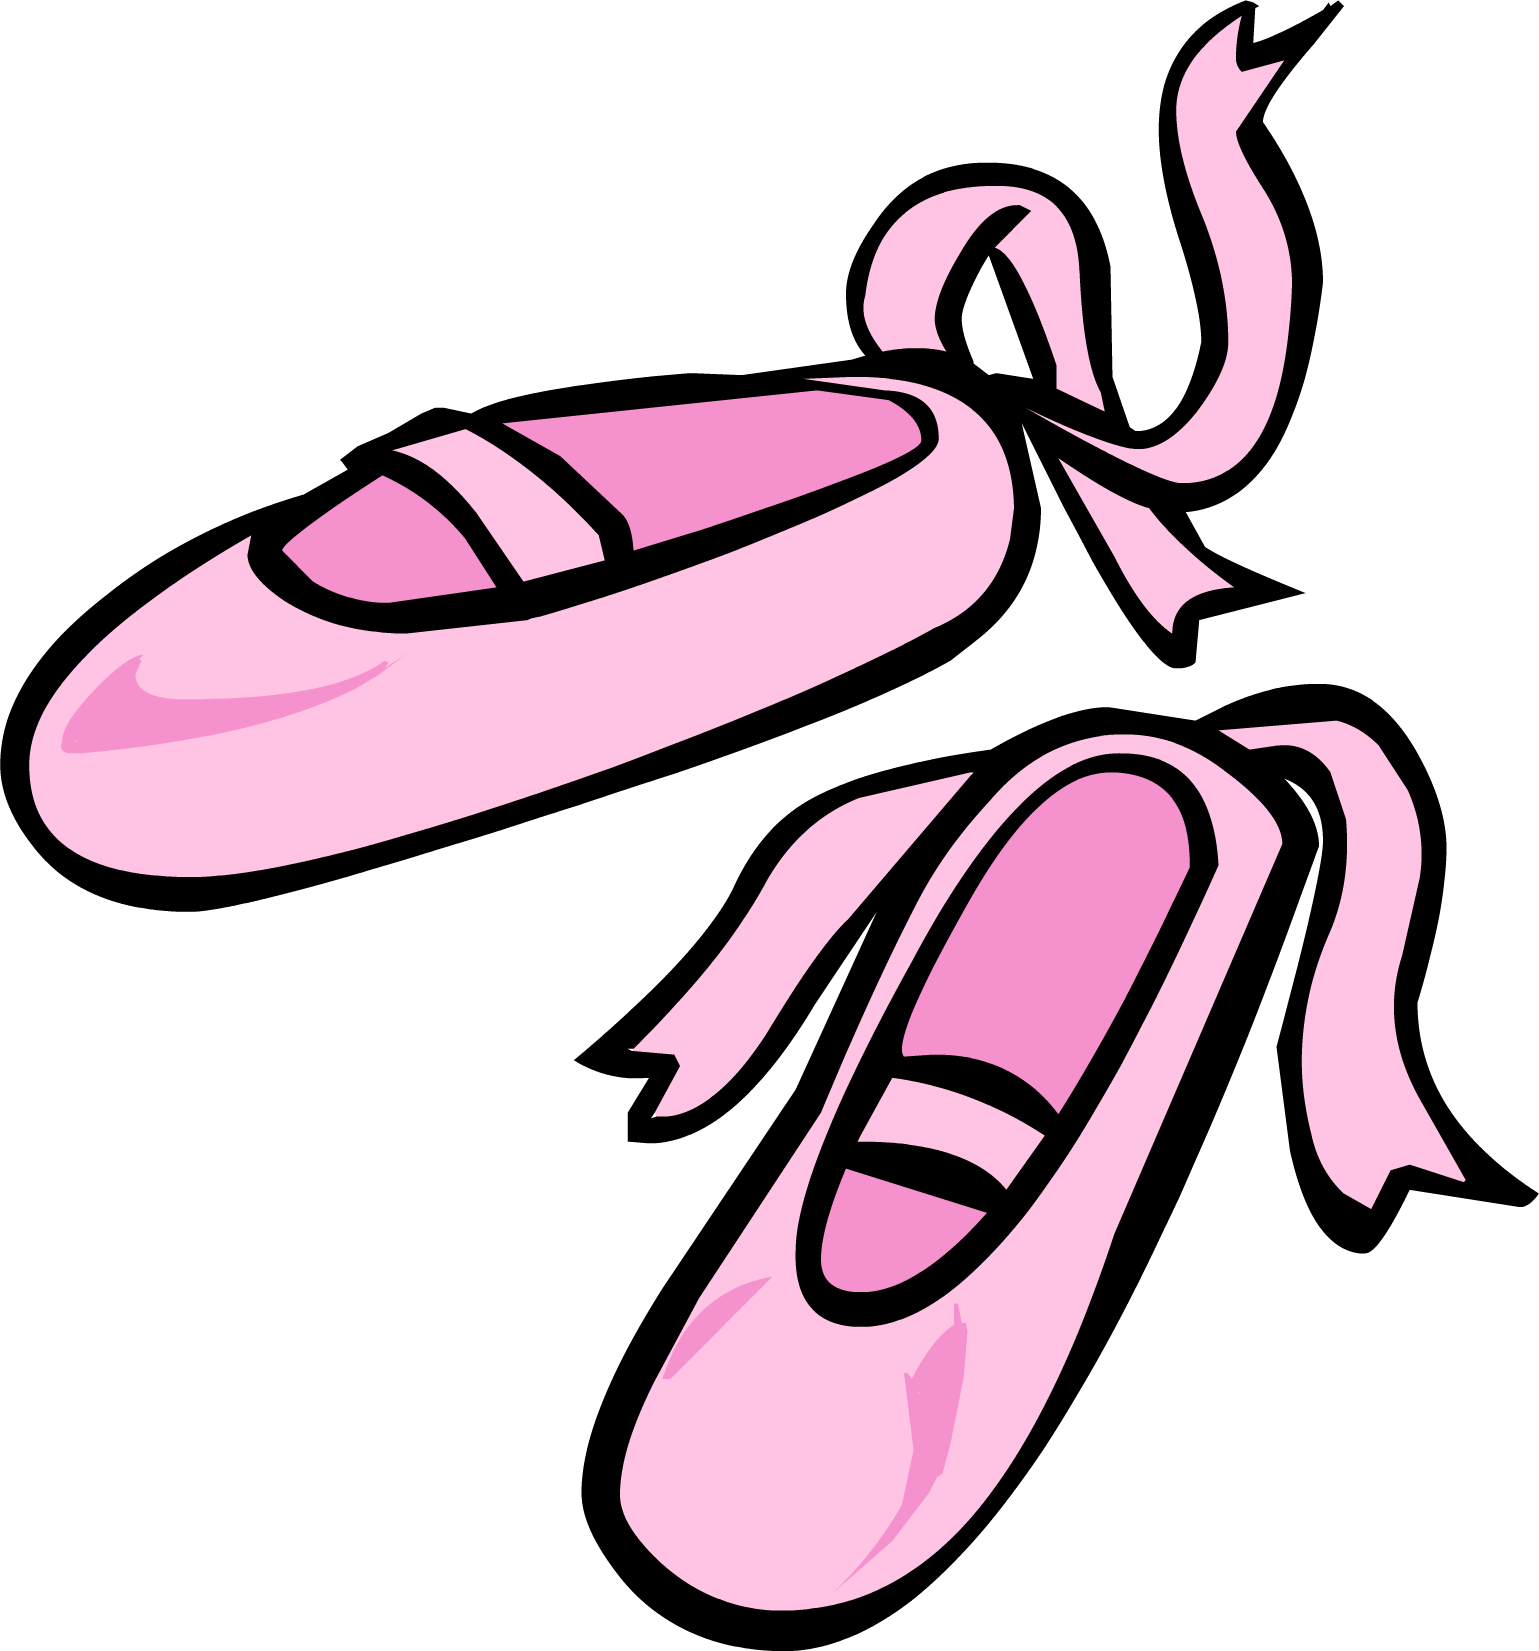 Ballet Shoes - Club Penguin Wiki - The free, editable encyclopedia ...